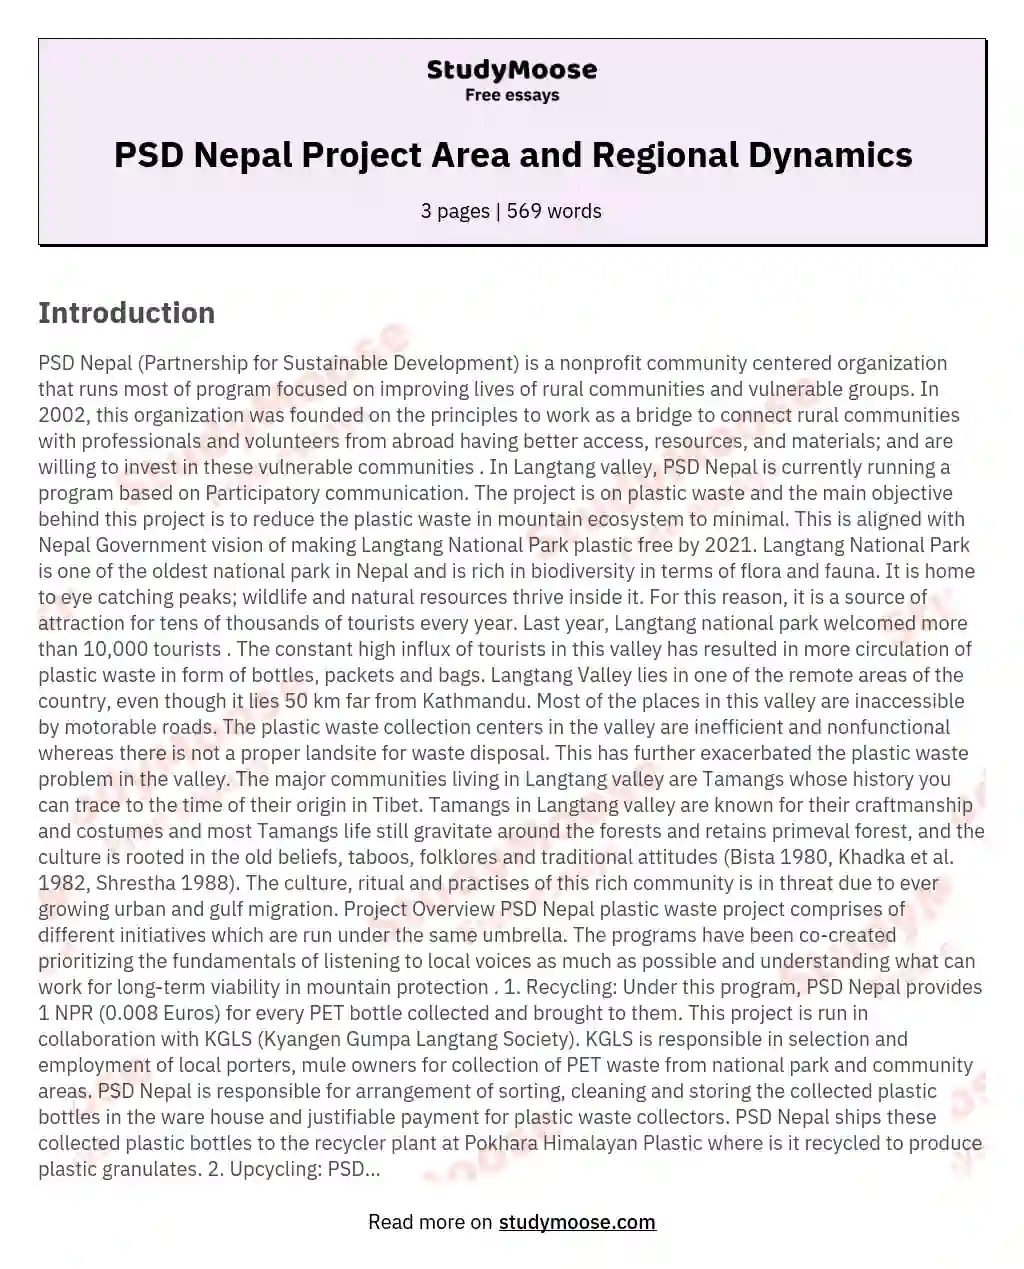 PSD Nepal Project Area and Regional Dynamics essay